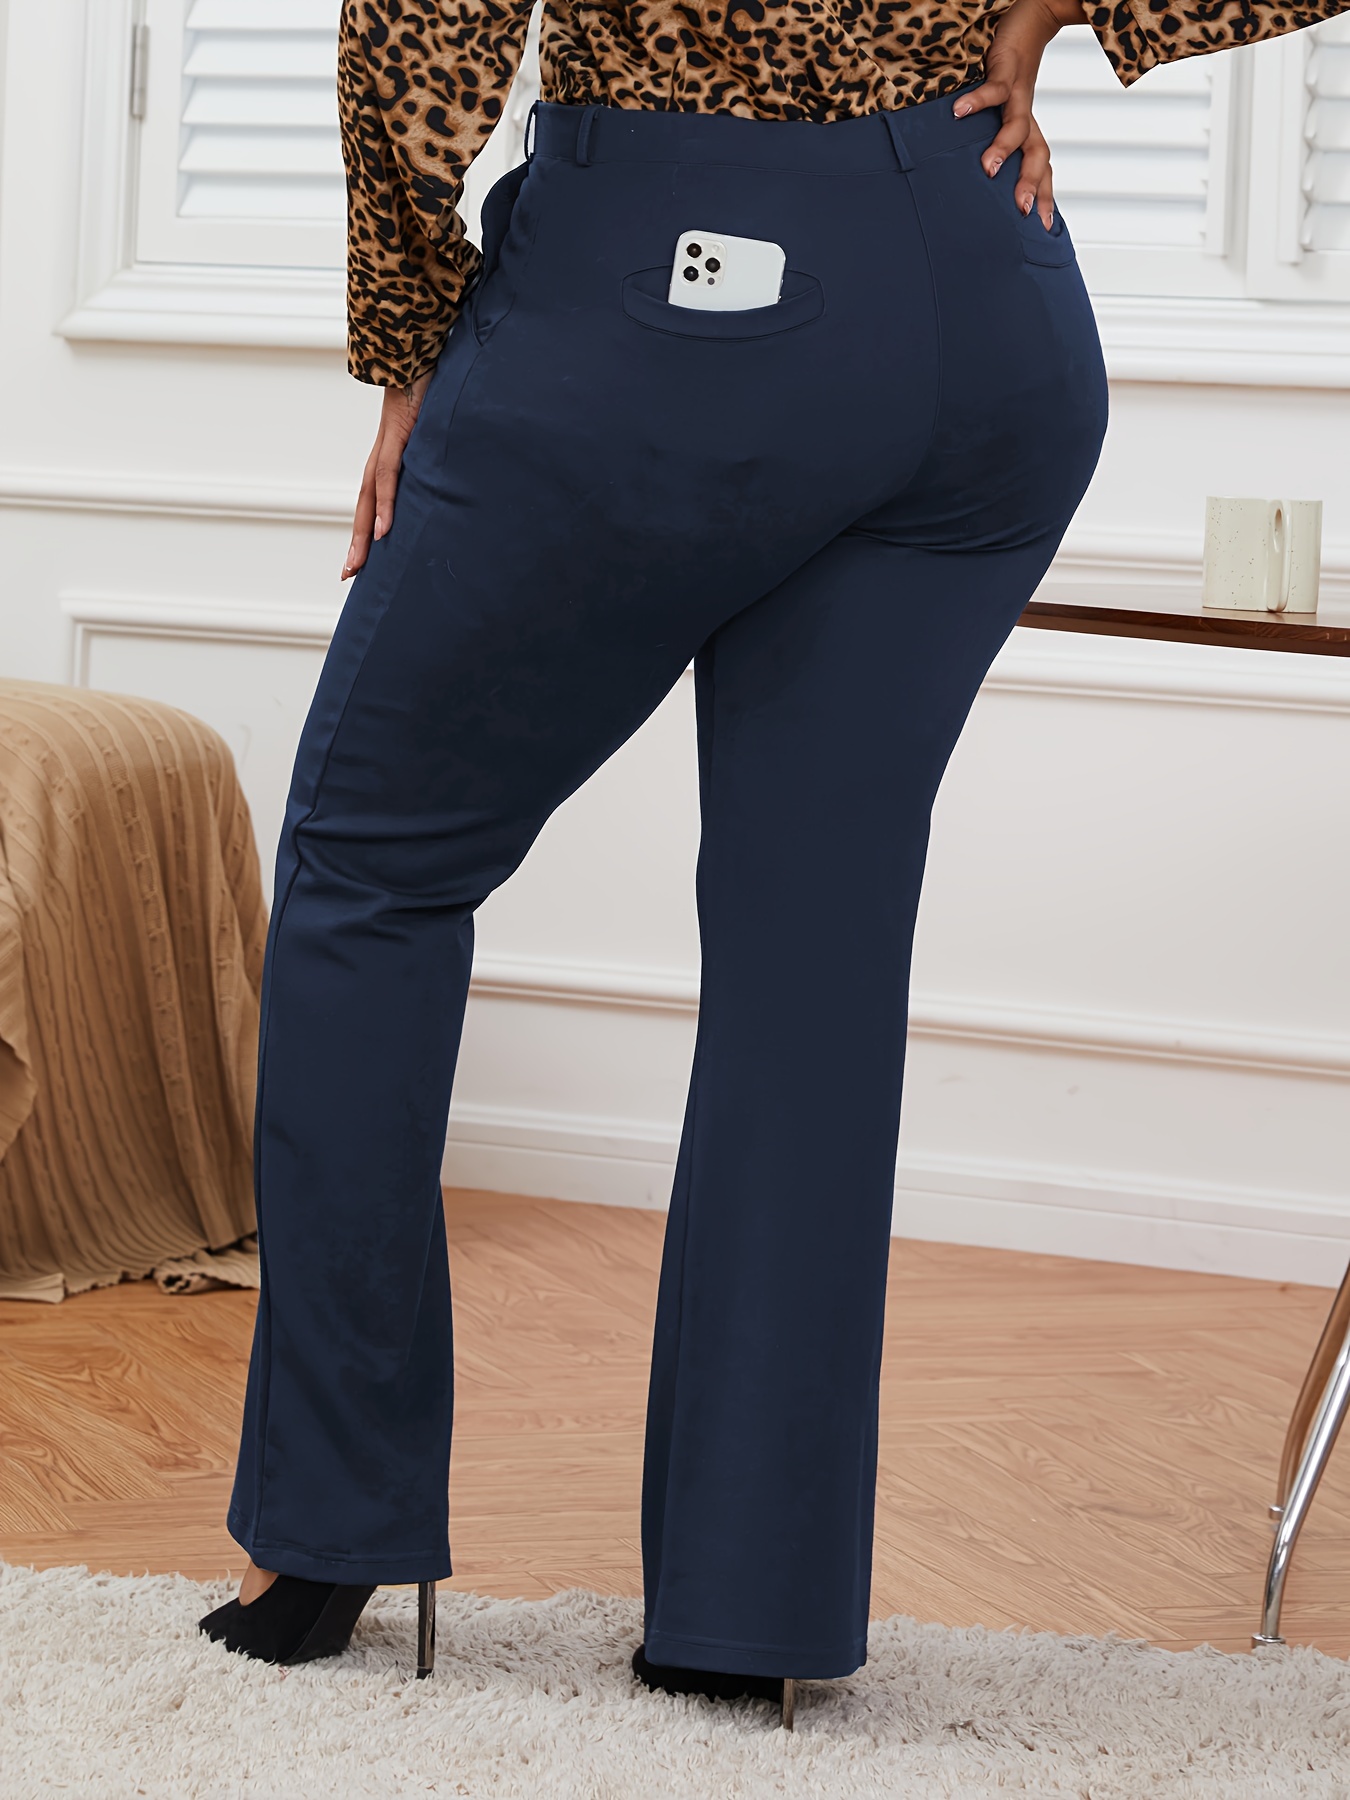 fvwitlyh Pants for Women Business Casual Women Pants plus Size